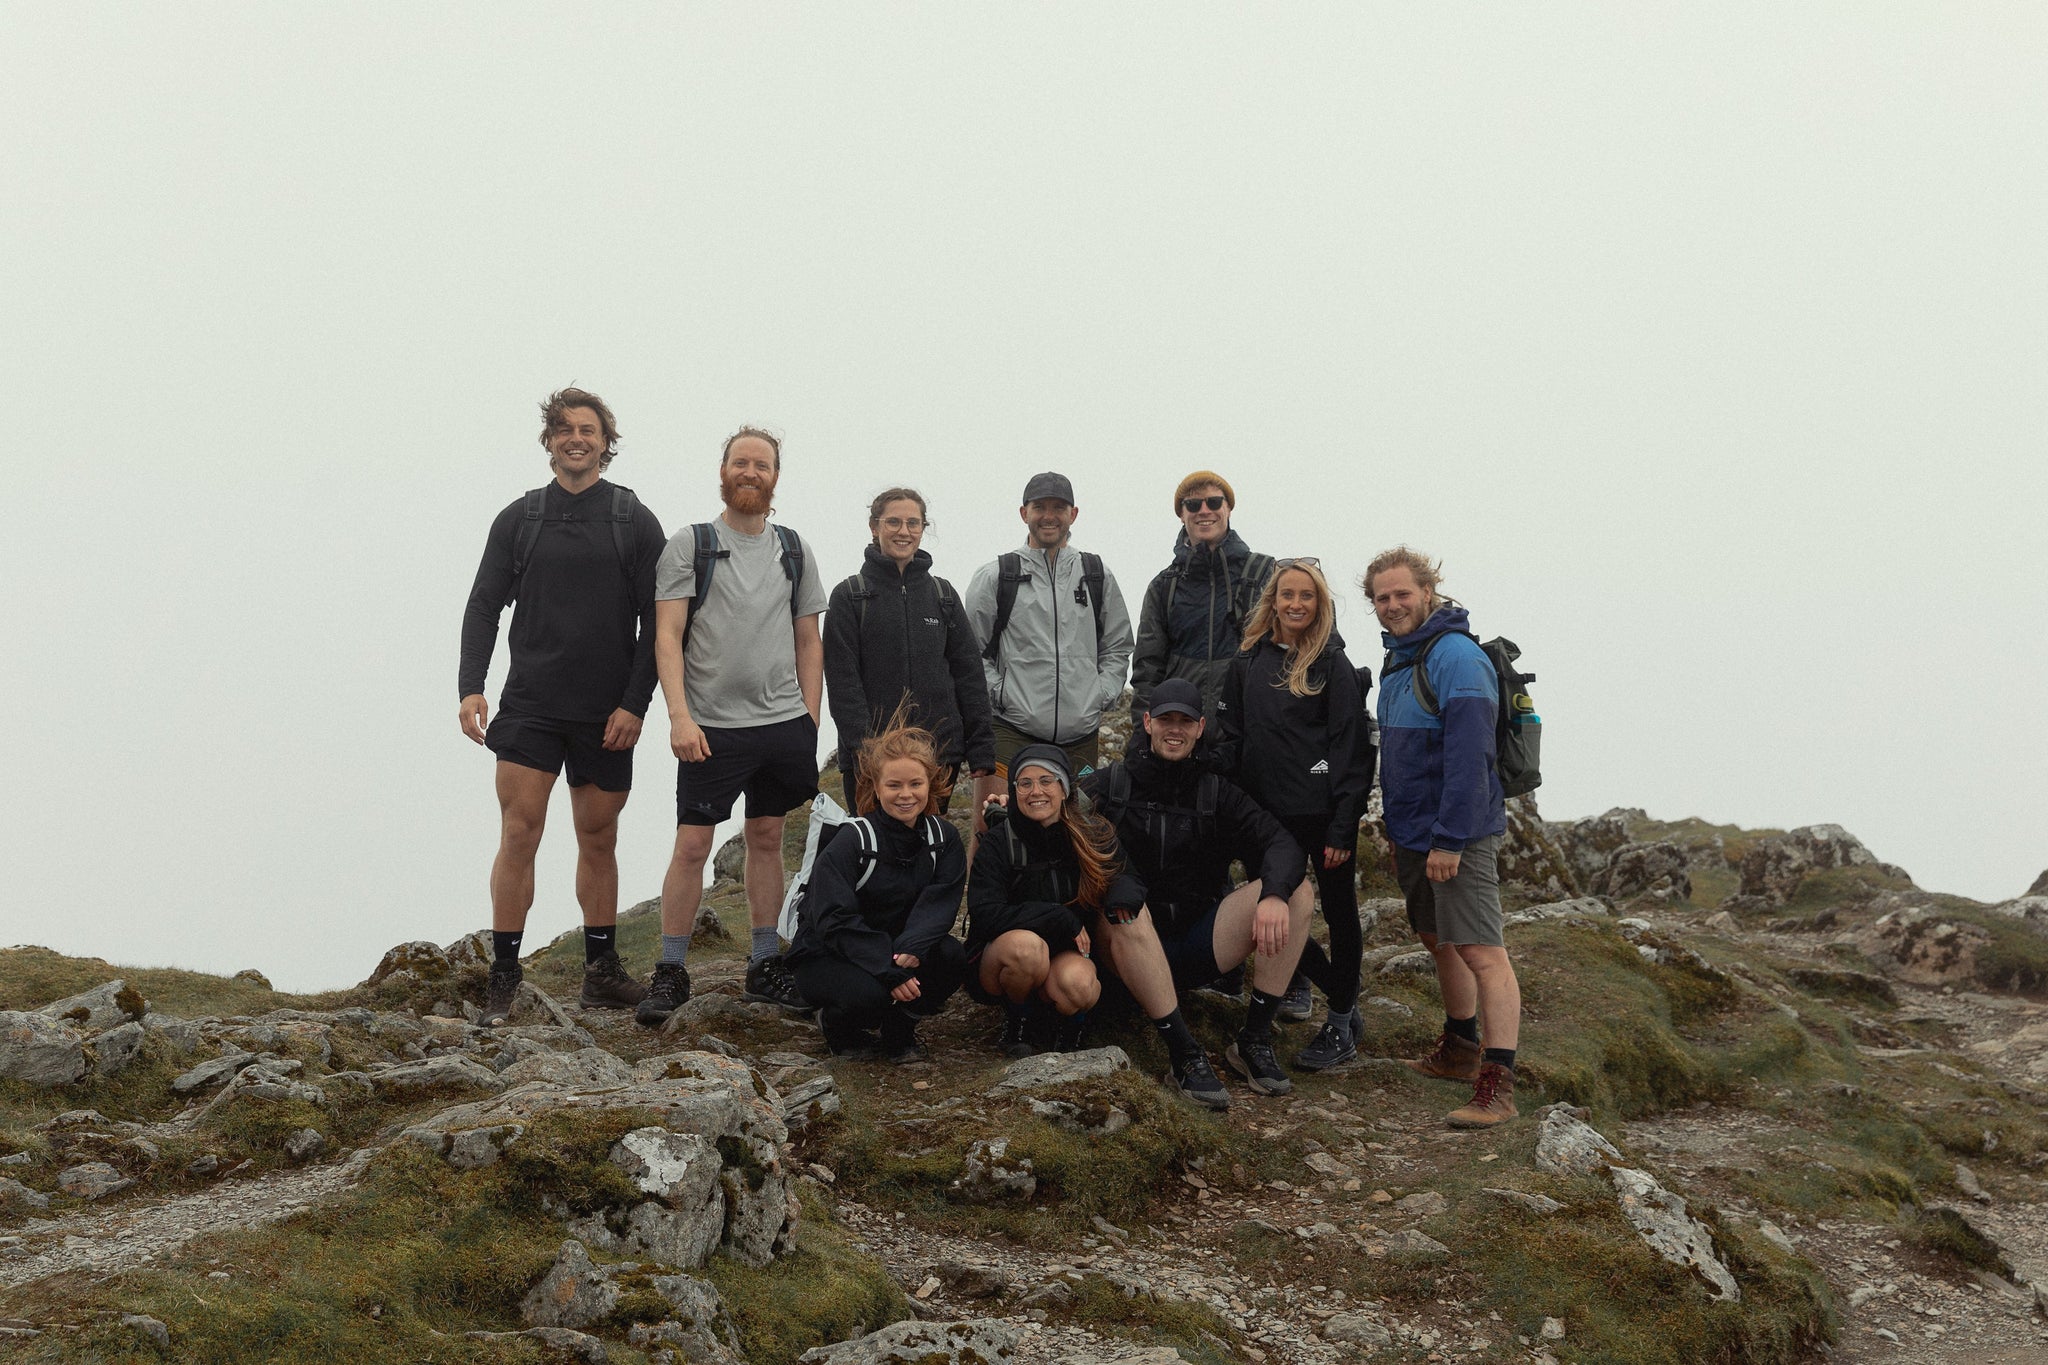 Stubble and Co team photo on Snowdon mountain